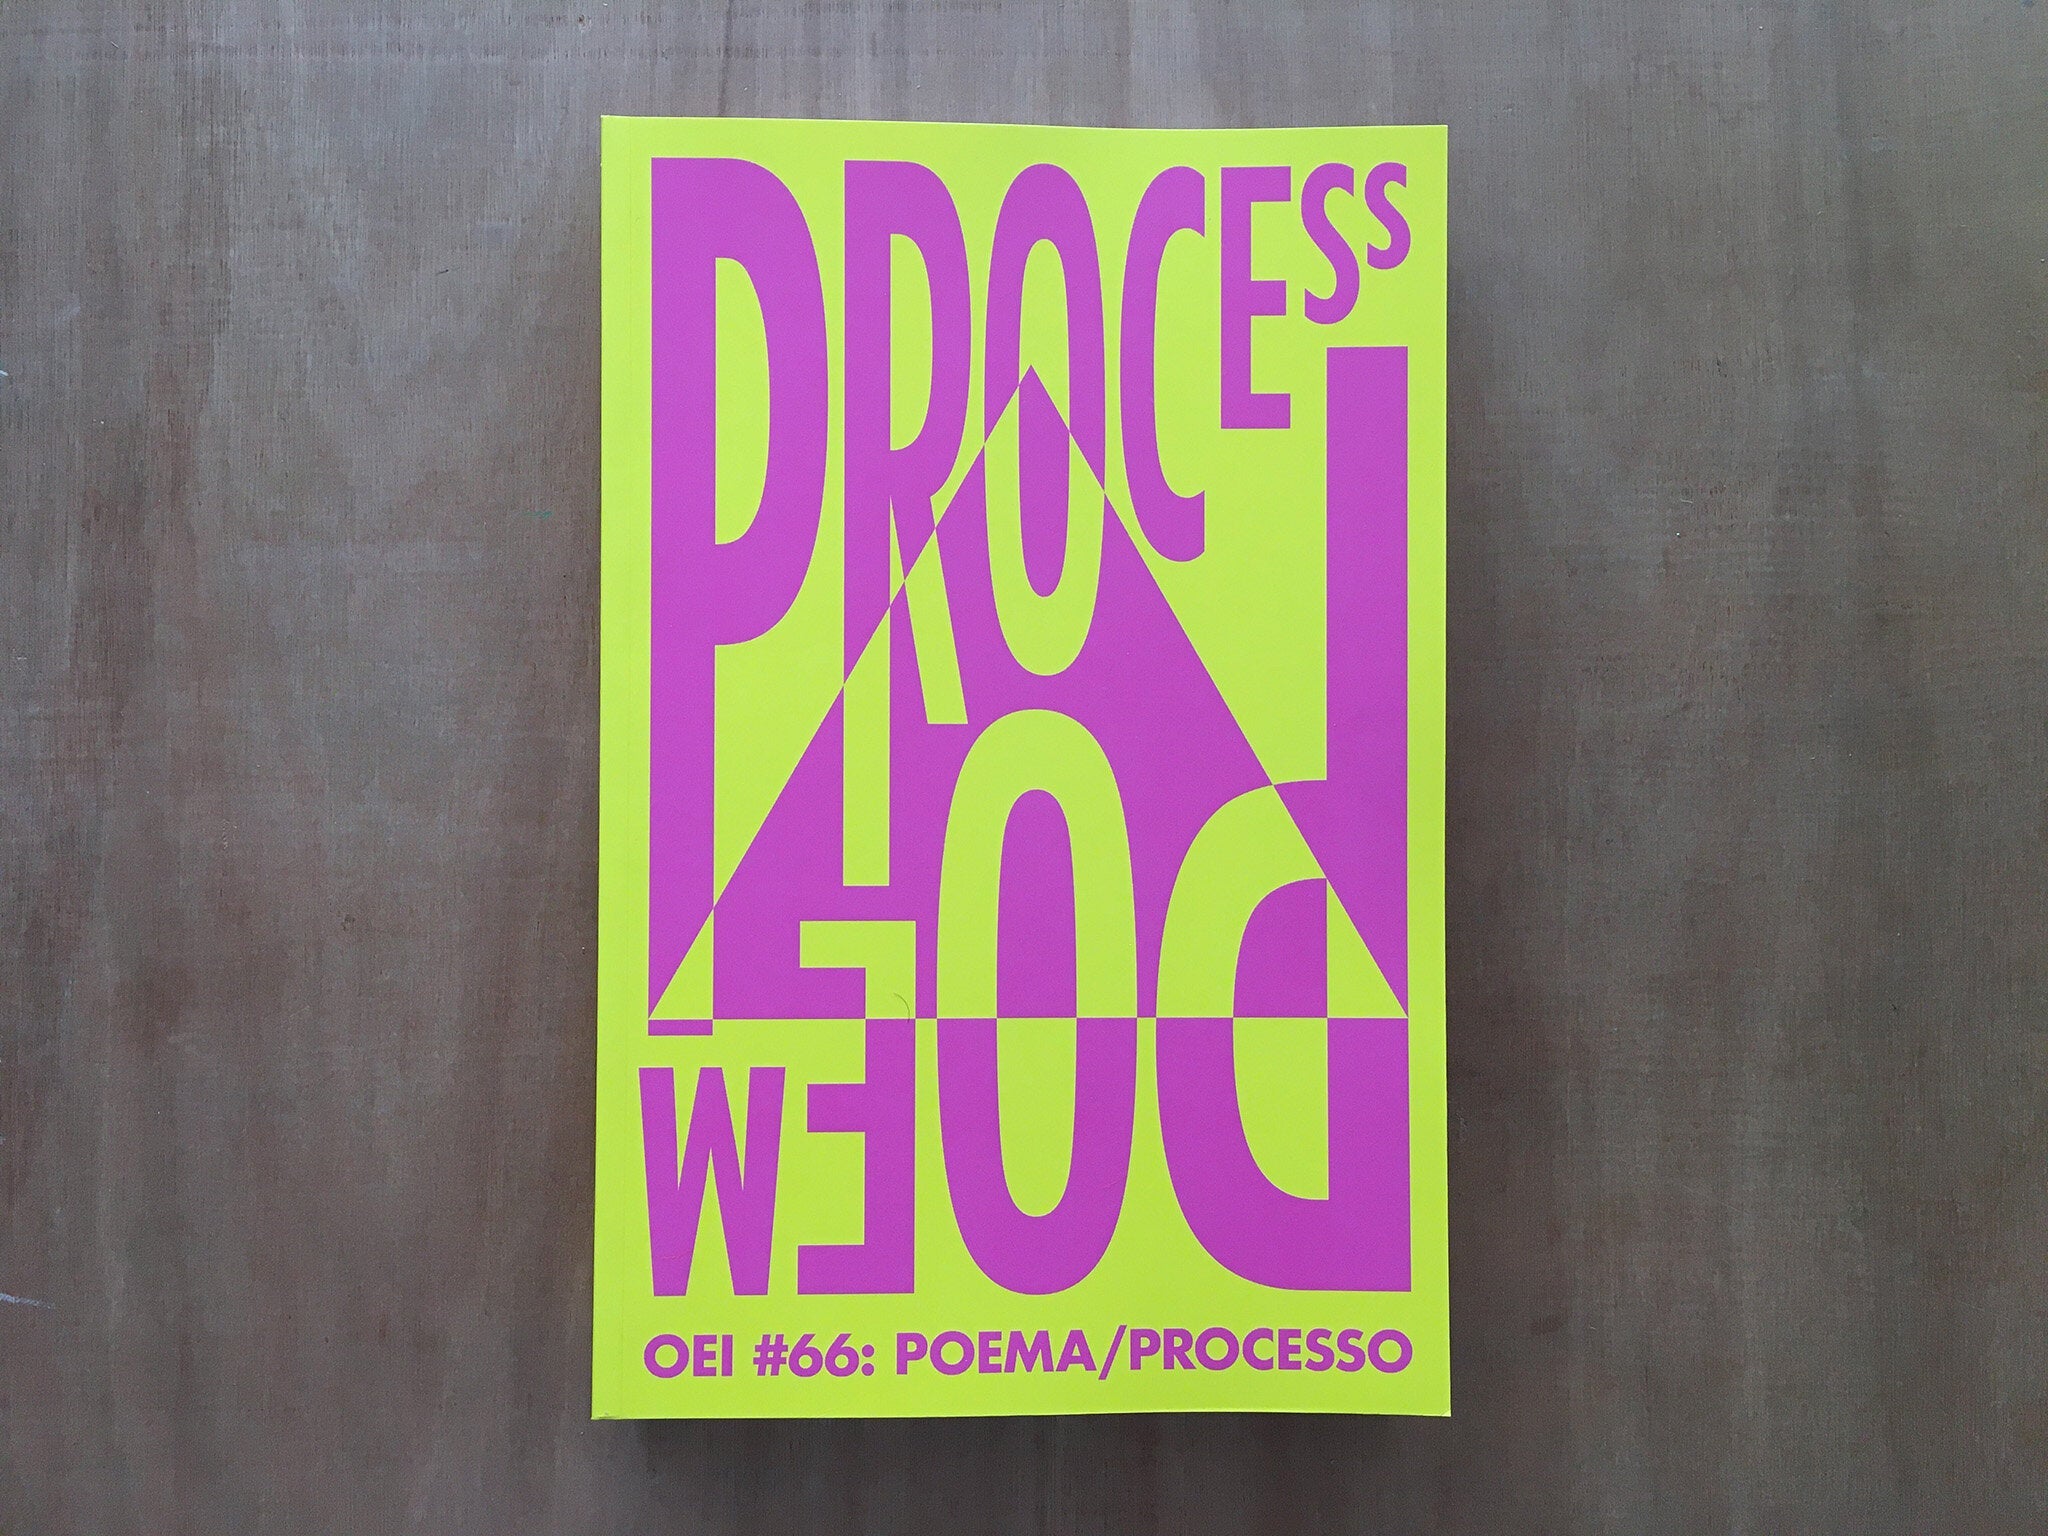 OEI #66 PROCESS/POEM — POEMA/PROCESSO edited by Jonas (J) Magnusson, Cecilia Grönberg and Tobi Maier